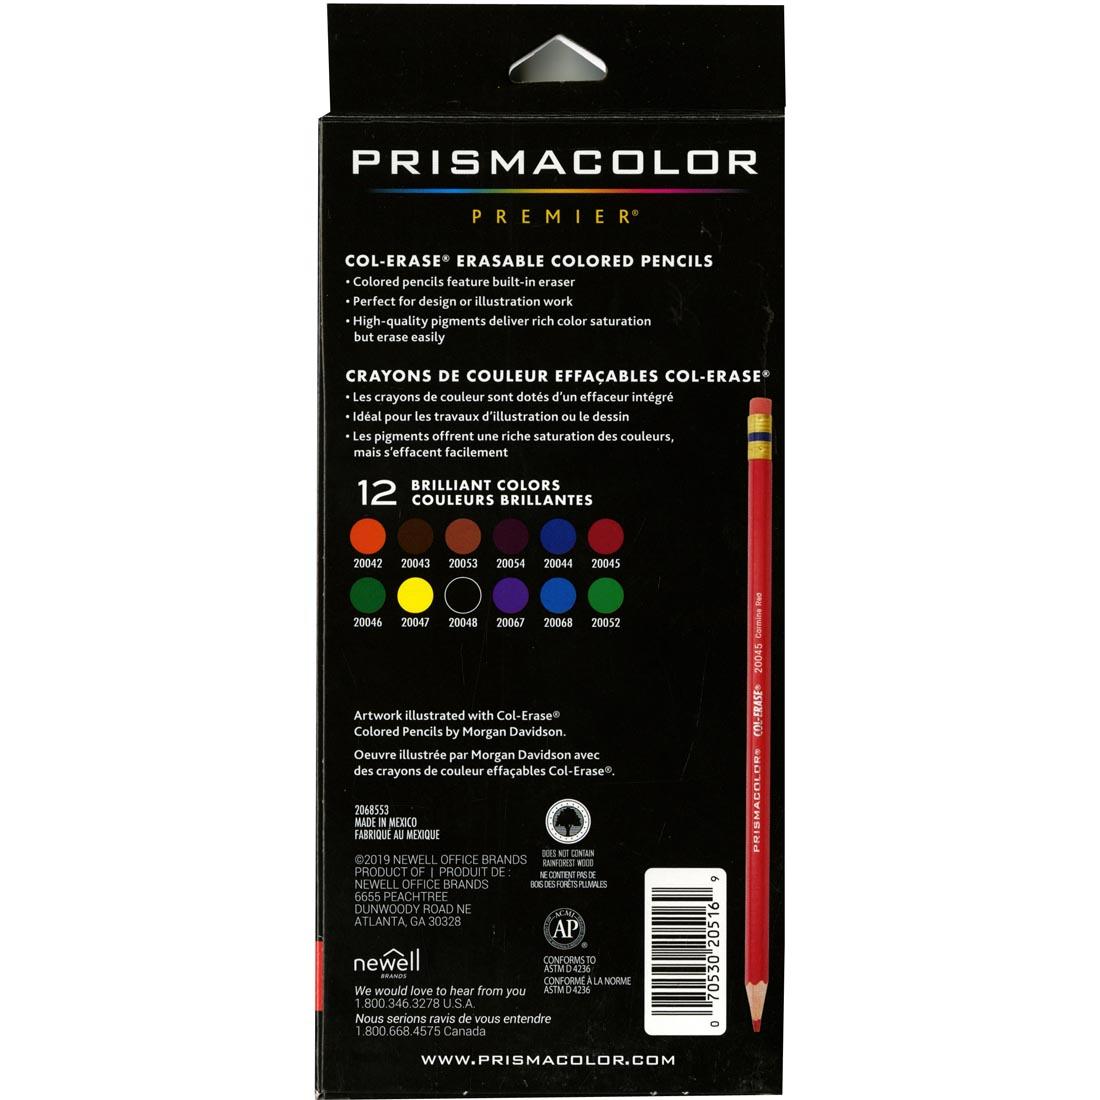 Back of package of Prismacolor Col-Erase Erasable Colored Pencils